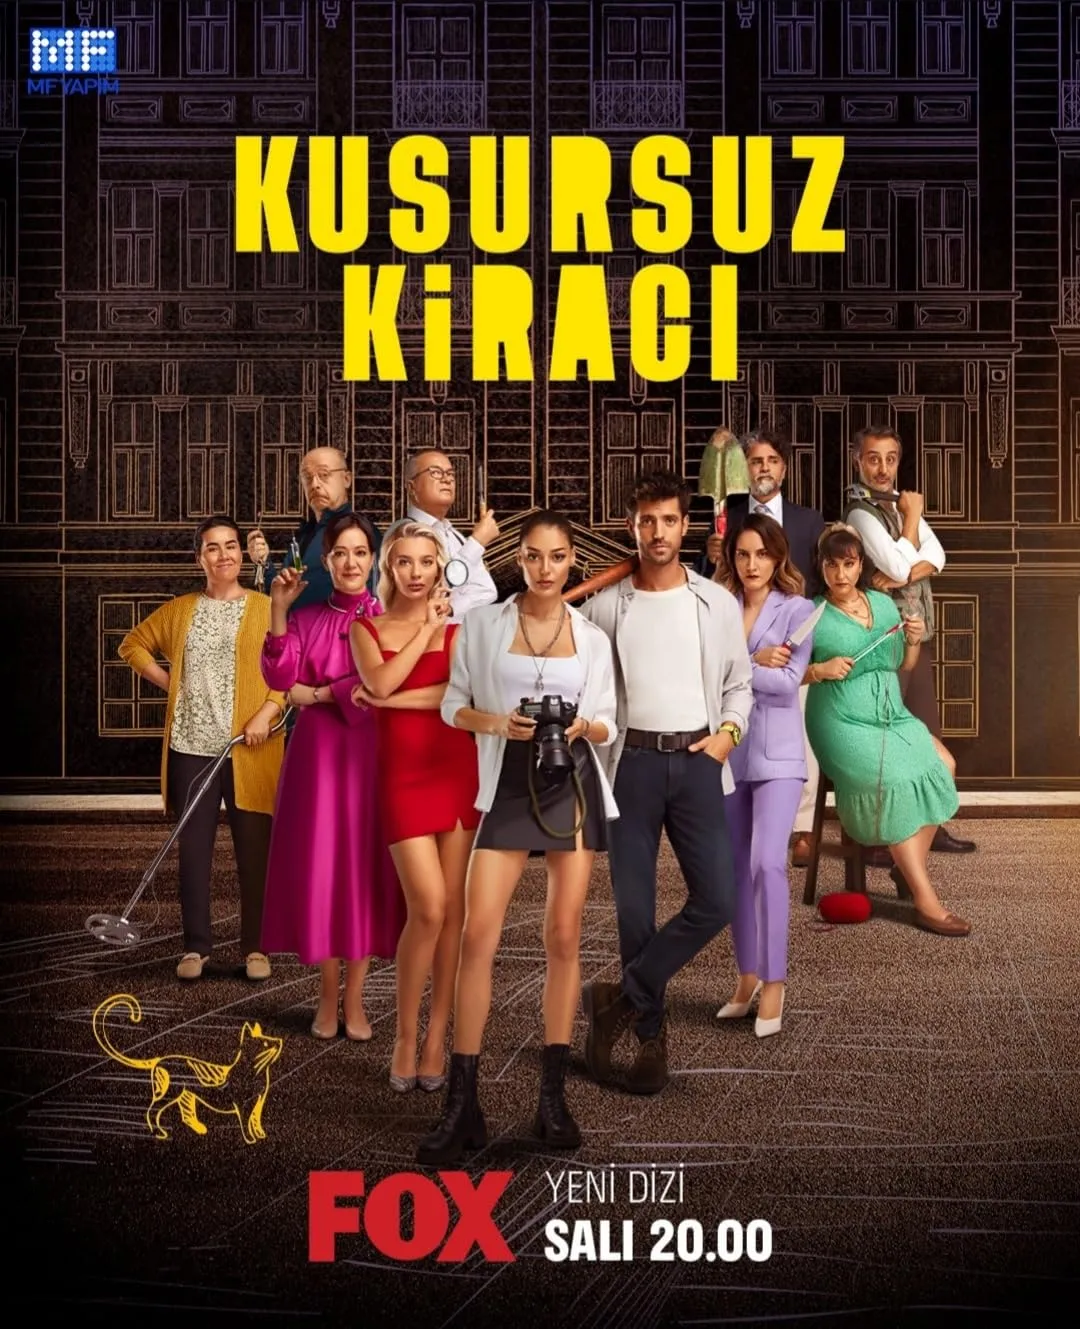 Kusursuz Kiraci | Chiriasul perfect online subtitrat in romana